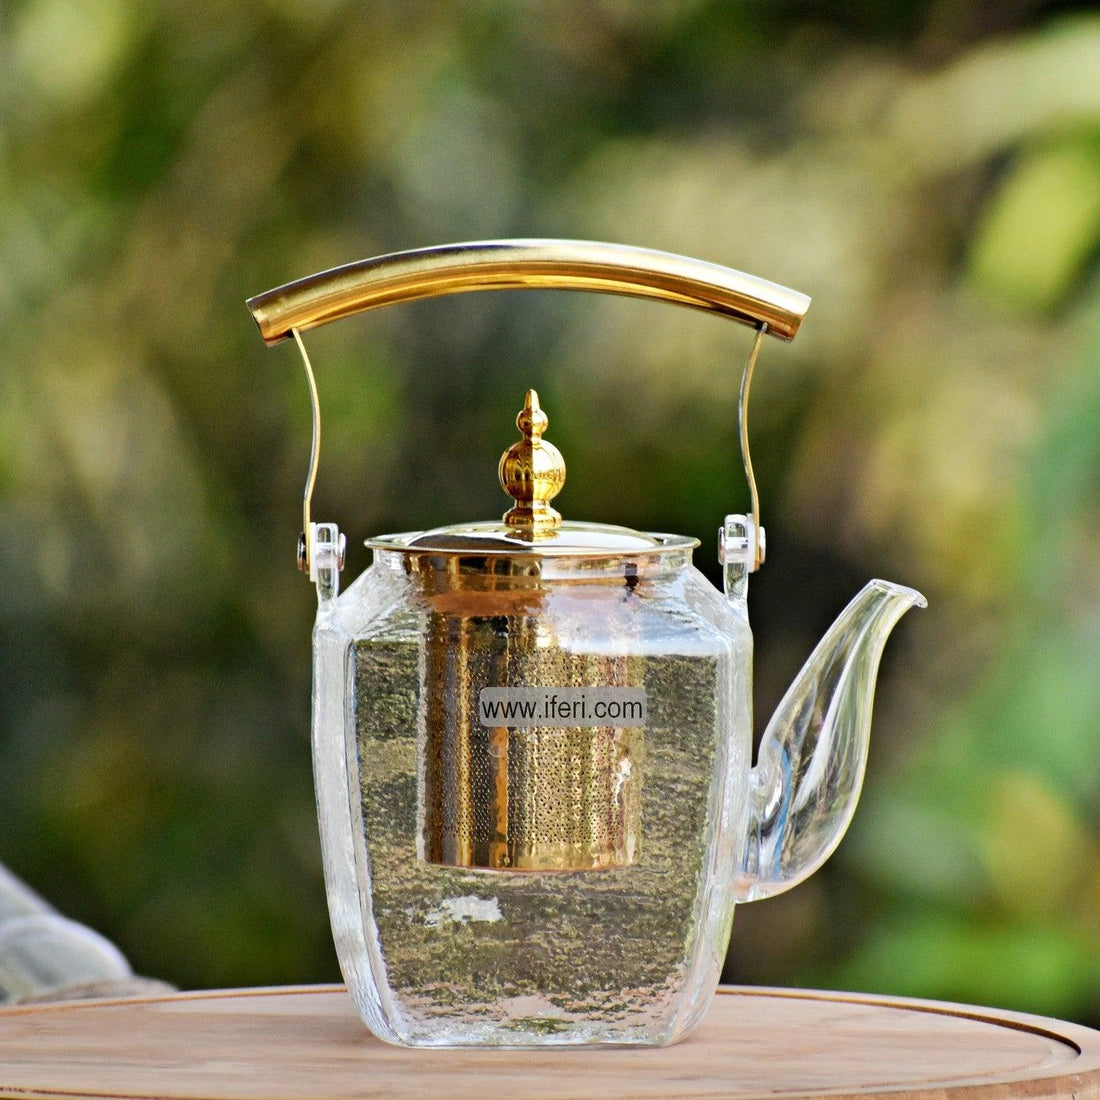 1000ml Tempered Glass Tea Pot with Infuser RY0142 Price in Bangladesh - iferi.com